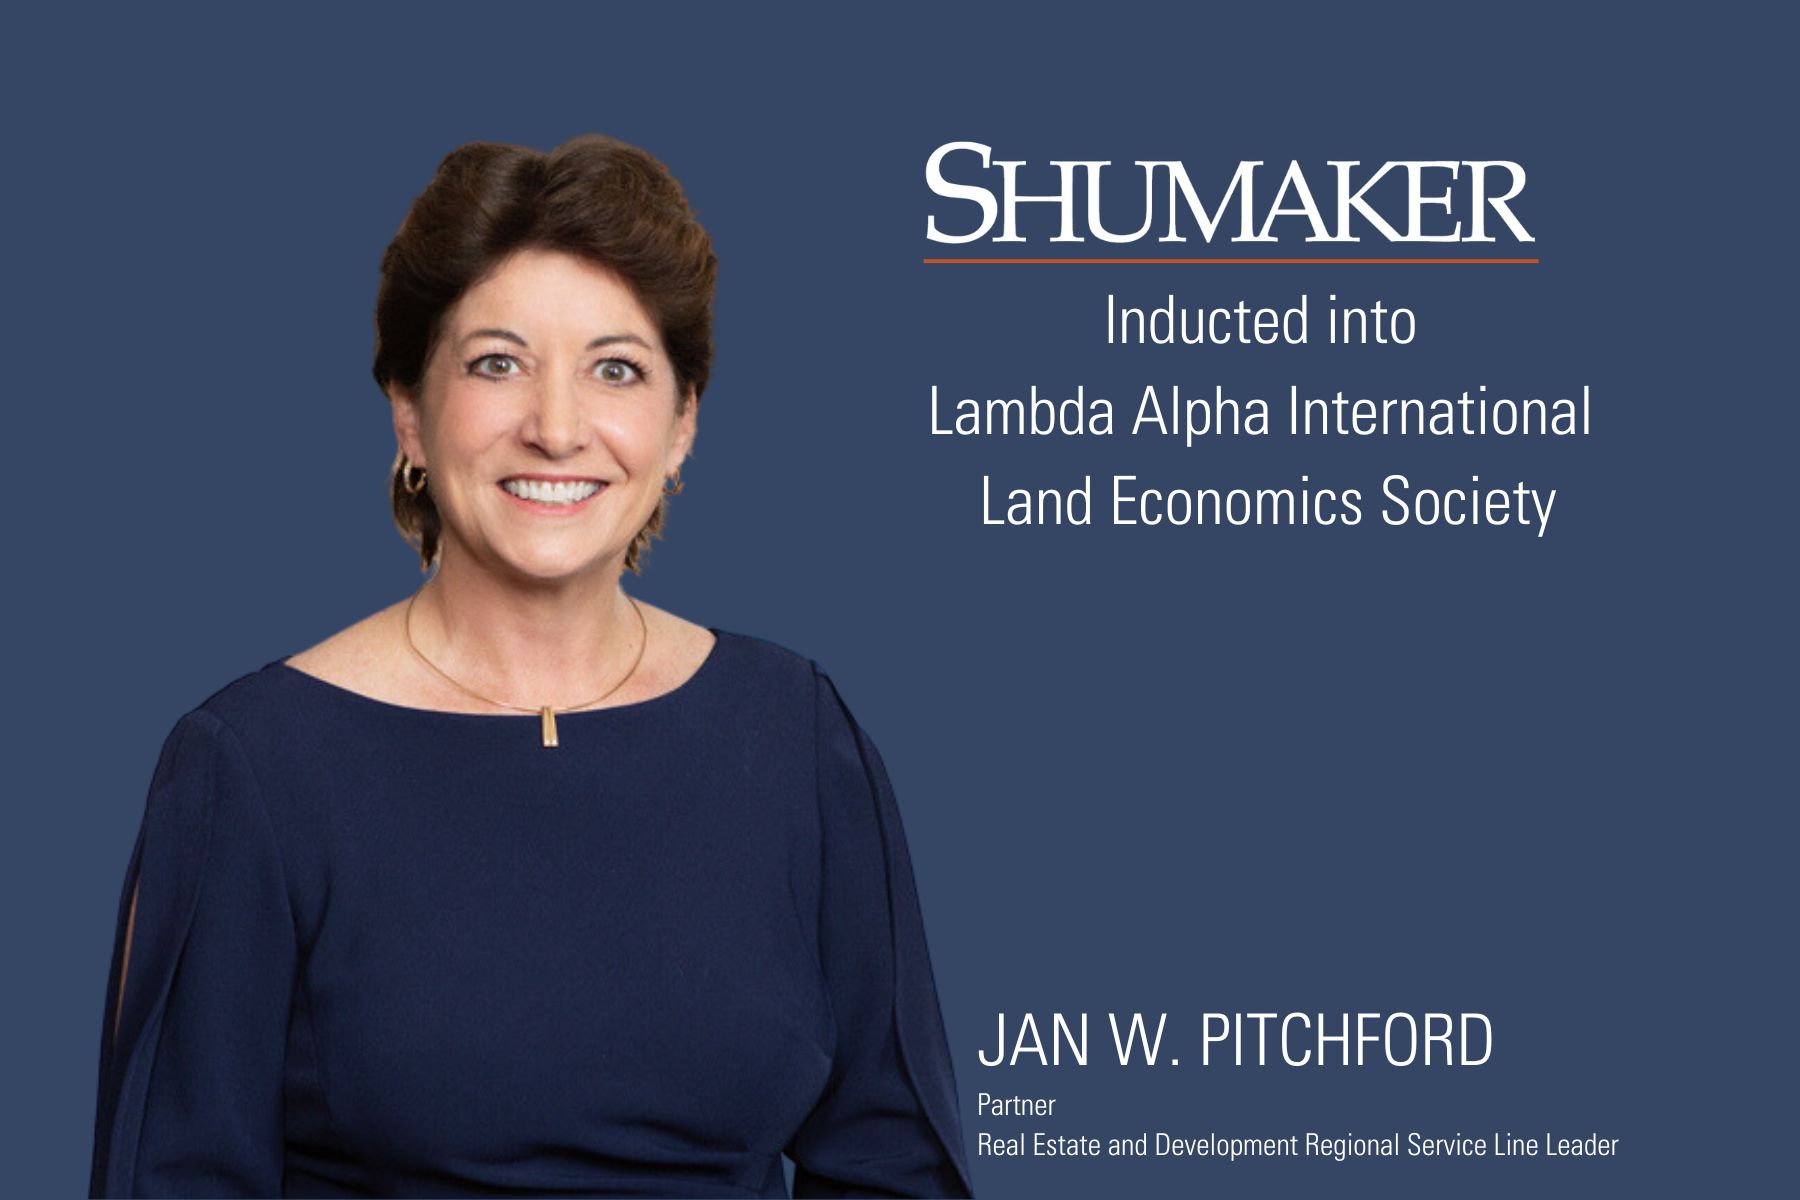 Jan W. Pitchford Inducted into Lambda Alpha International Land Economics Society